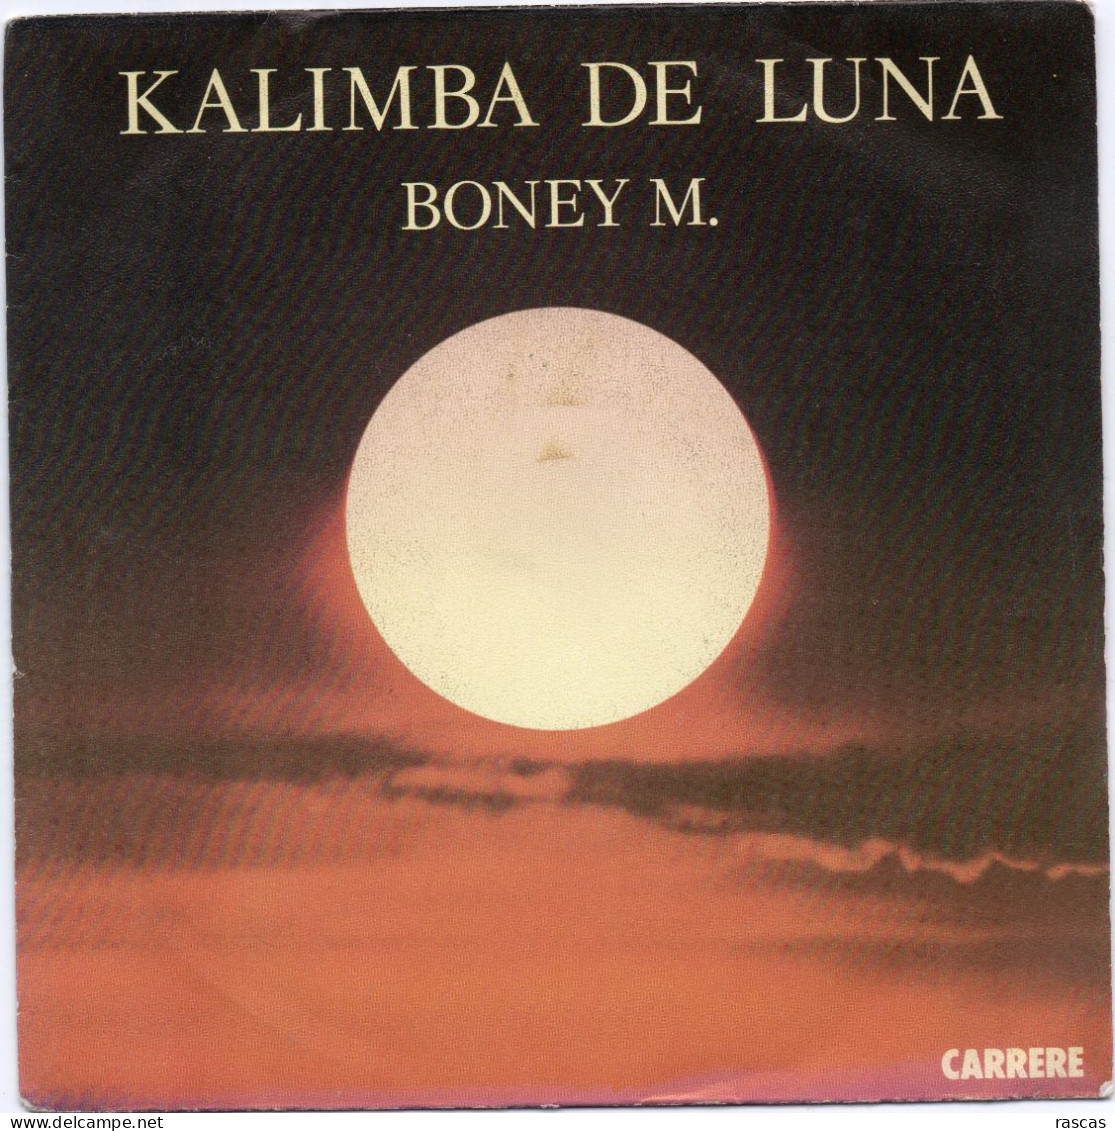 DISQUE VINYL 45 T DU GROUPE DISCO BONEY M - KALIMBA DE LUNA - Disco, Pop